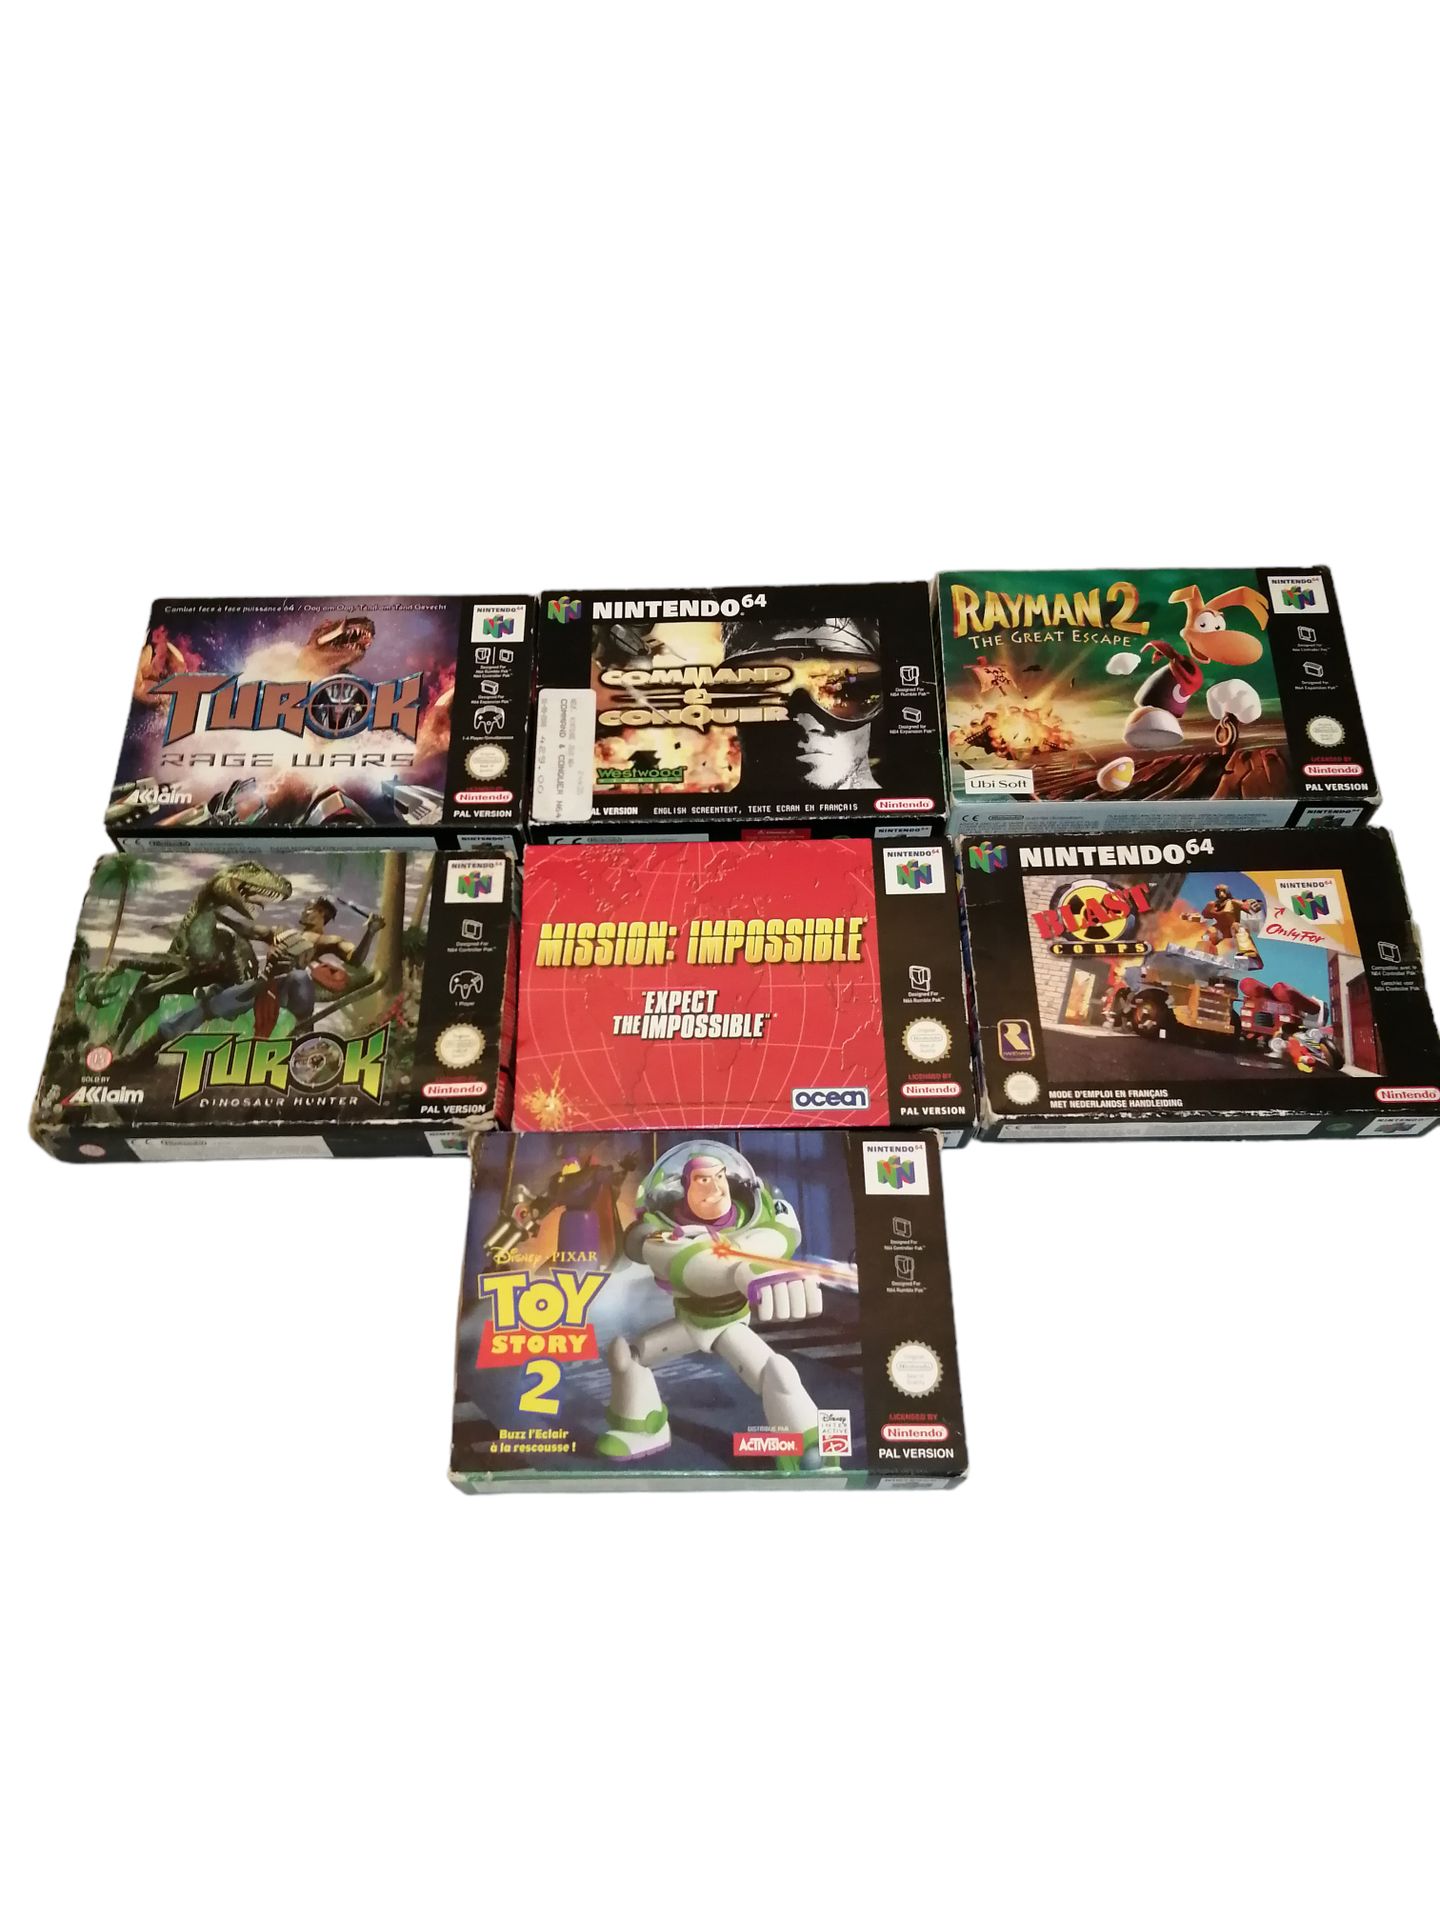 Null NINTENDO 64 - Set of 7 Nintendo 64 games:
Turok, 
Command Conquer, 
Rayman &hellip;